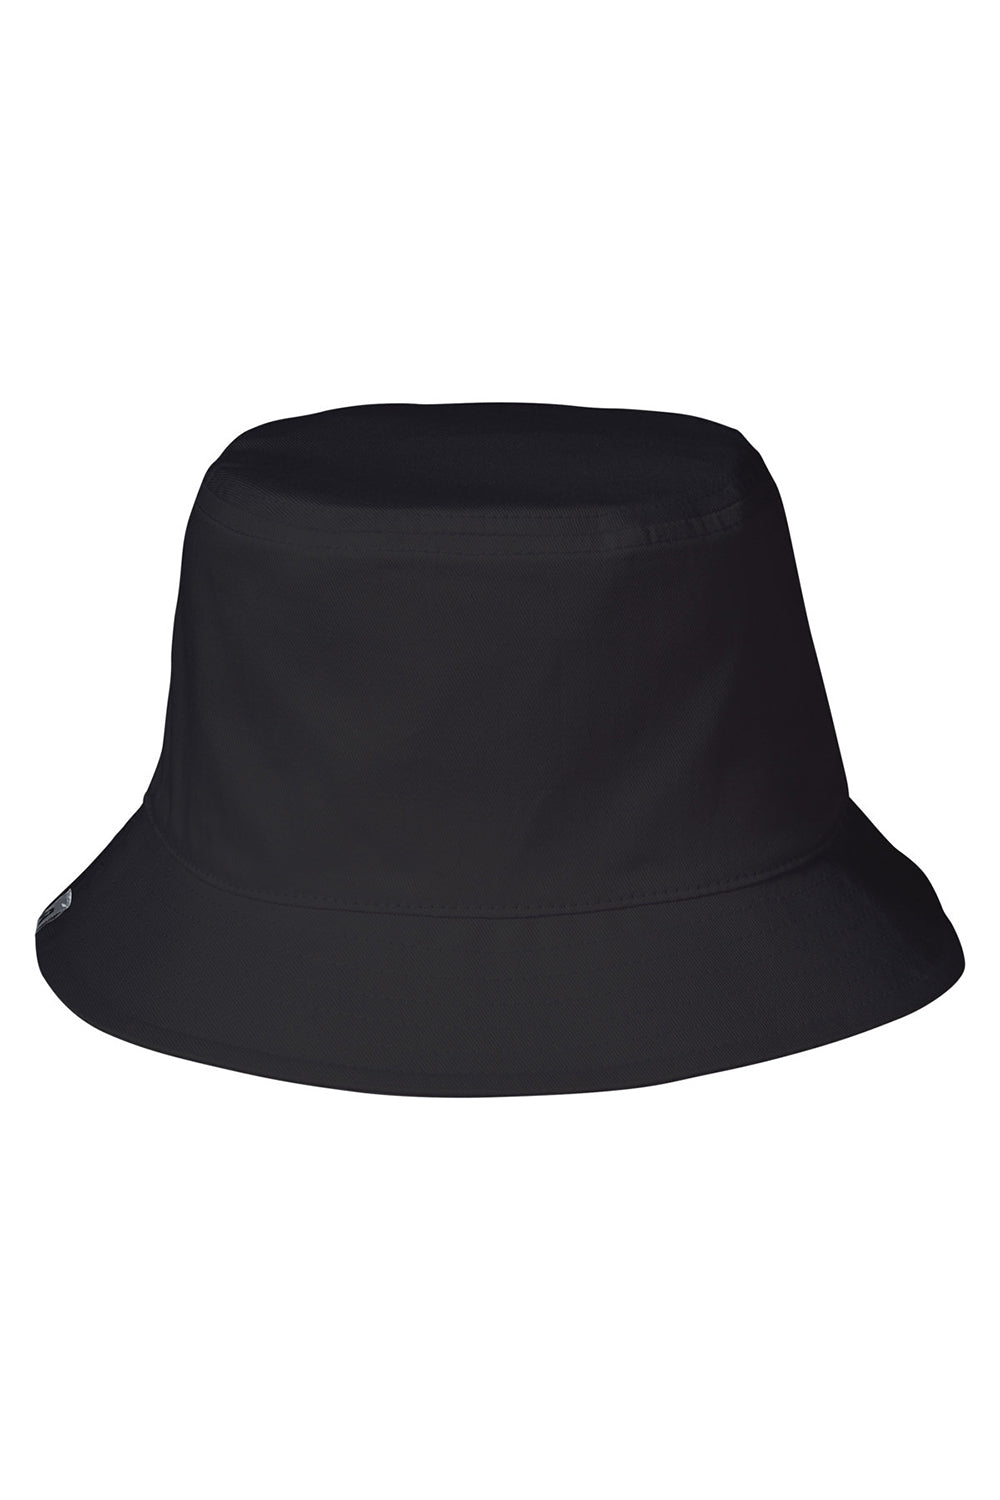 J America 5540JA Mens Gilligan Bonnie Bucket Hat Black Front